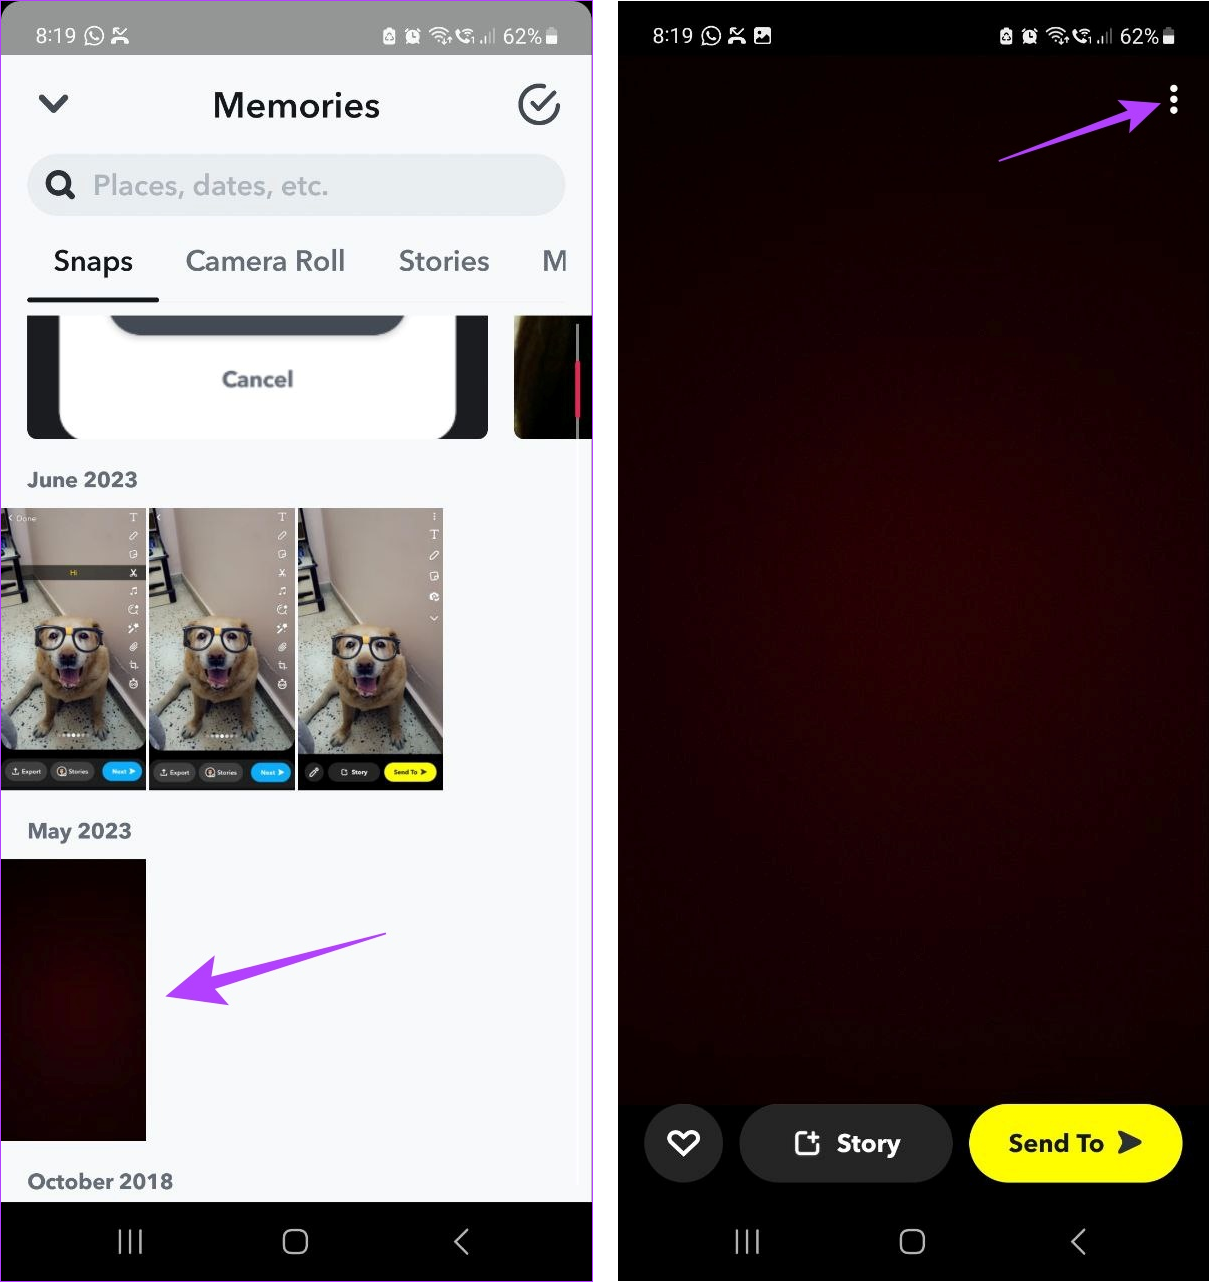 Snap را از Snapchat Memories انتخاب کنید